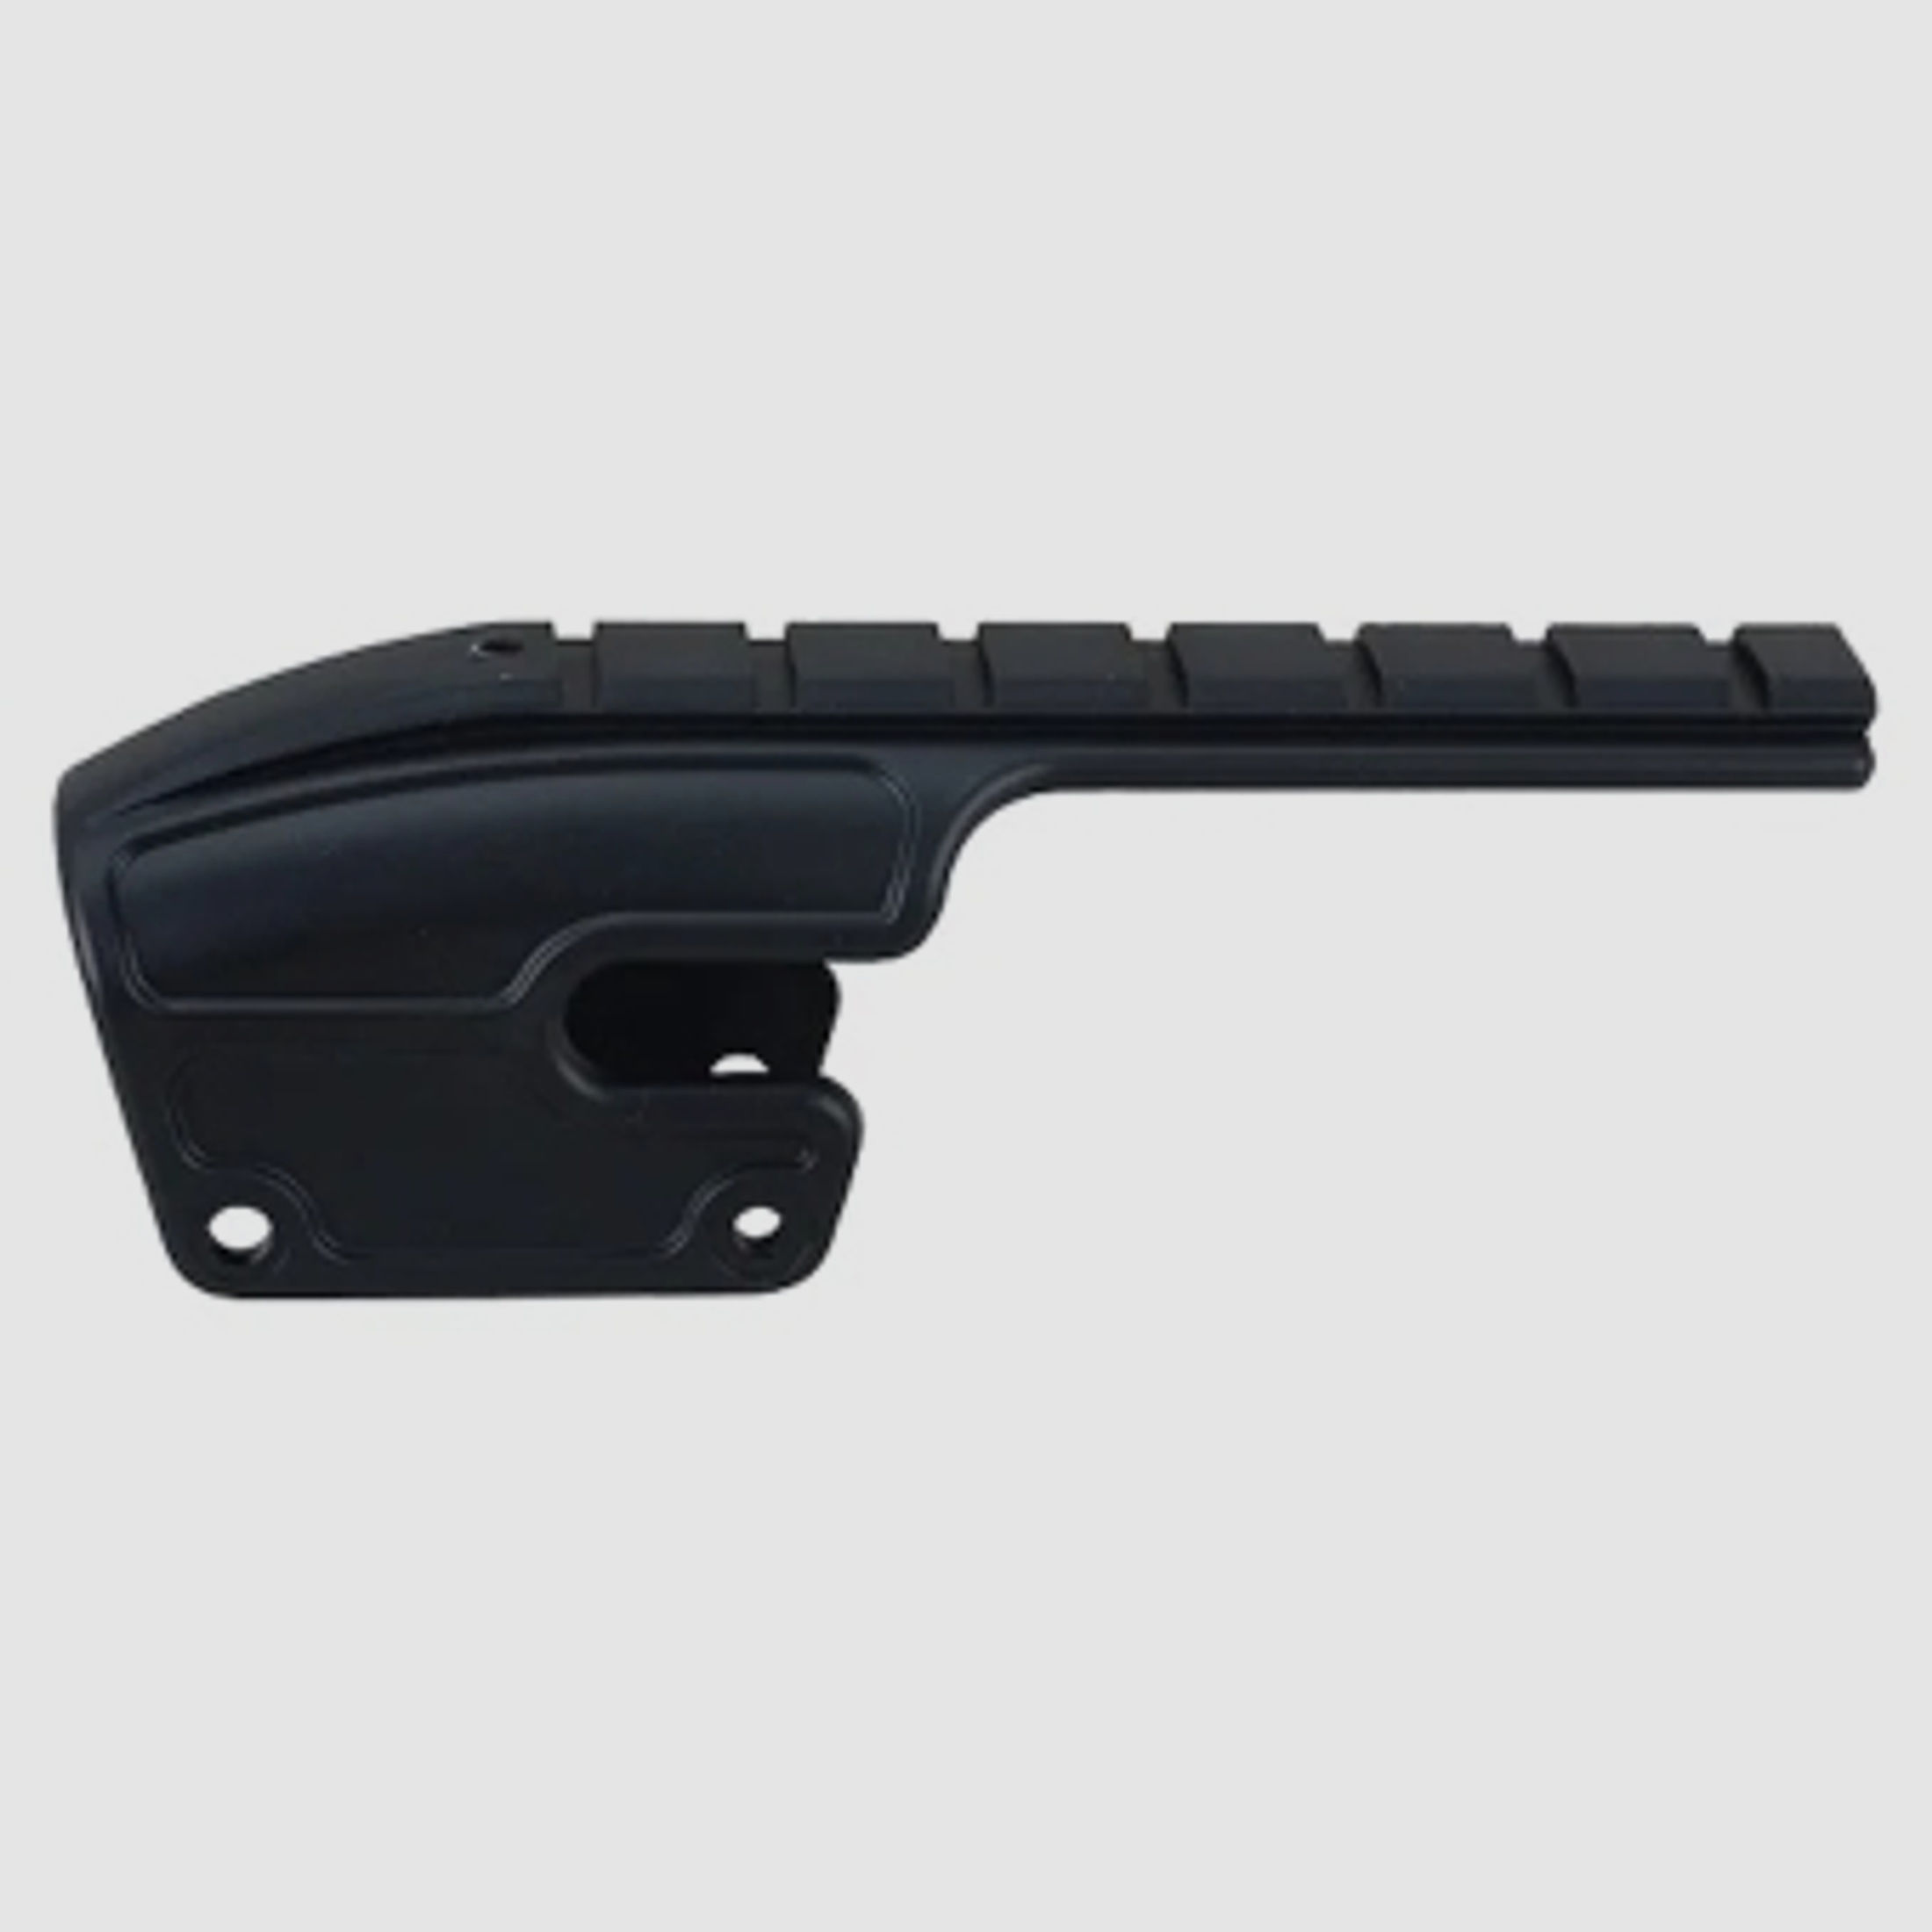 Weaver No Gunsmith Sattelmontage f. Remington 870, 1100, 11-87 matt schwarz